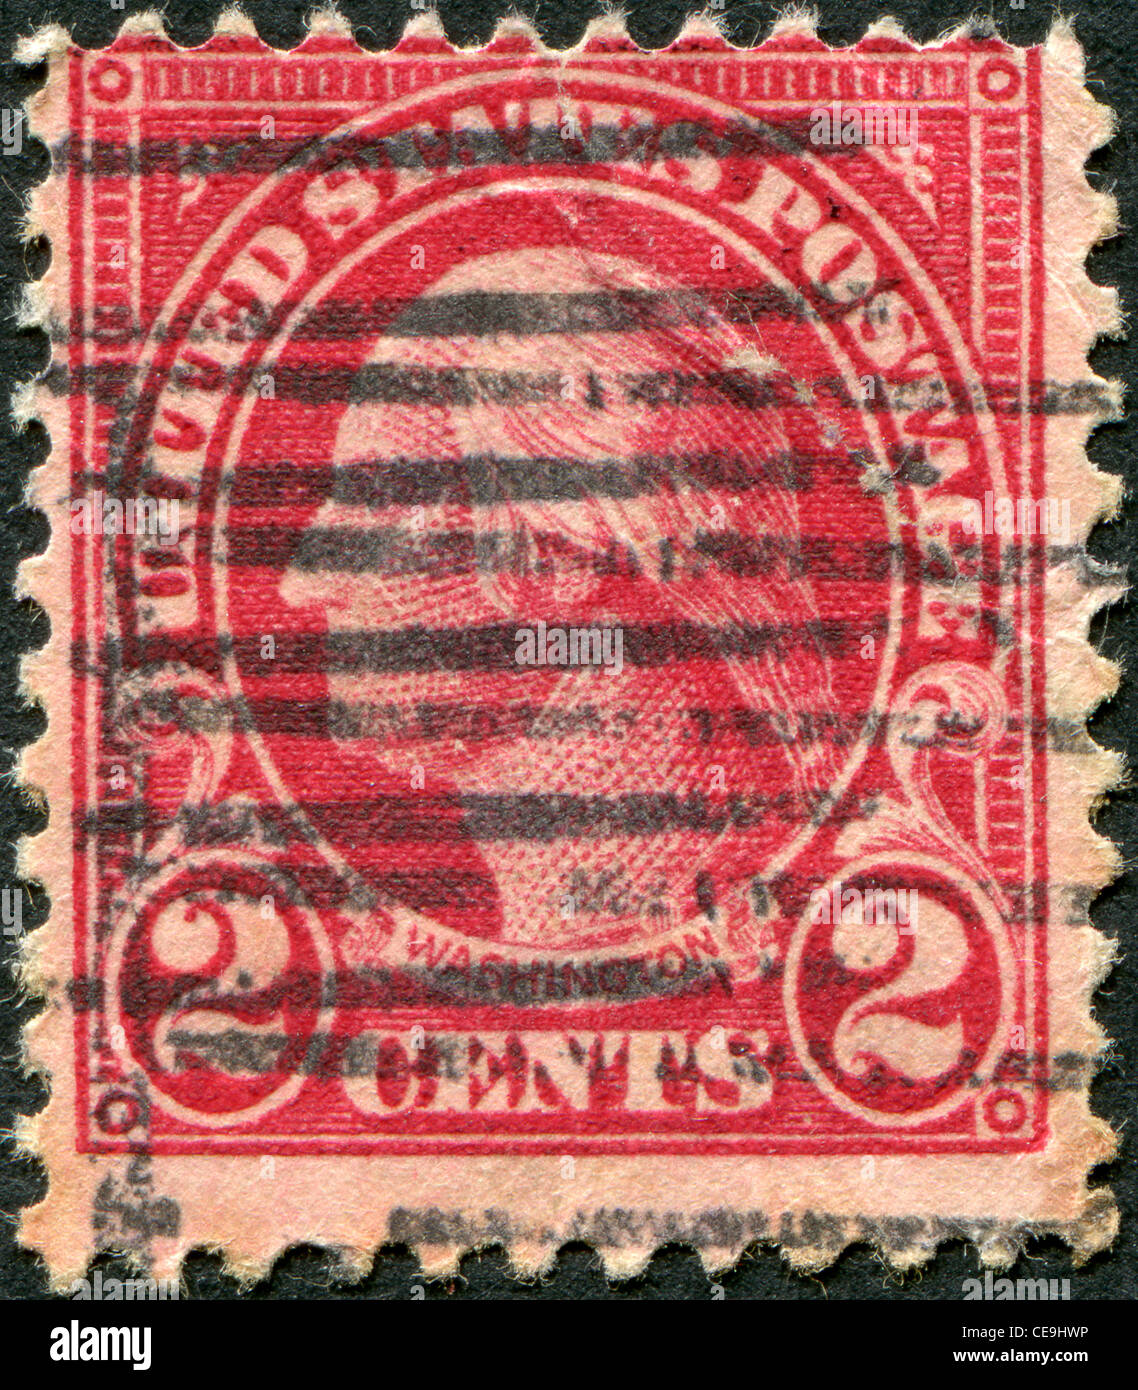 USA - CIRCA 1923: A stamp printed in the USA, shows the first U.S. president, George Washington, circa 1923 Stock Photo